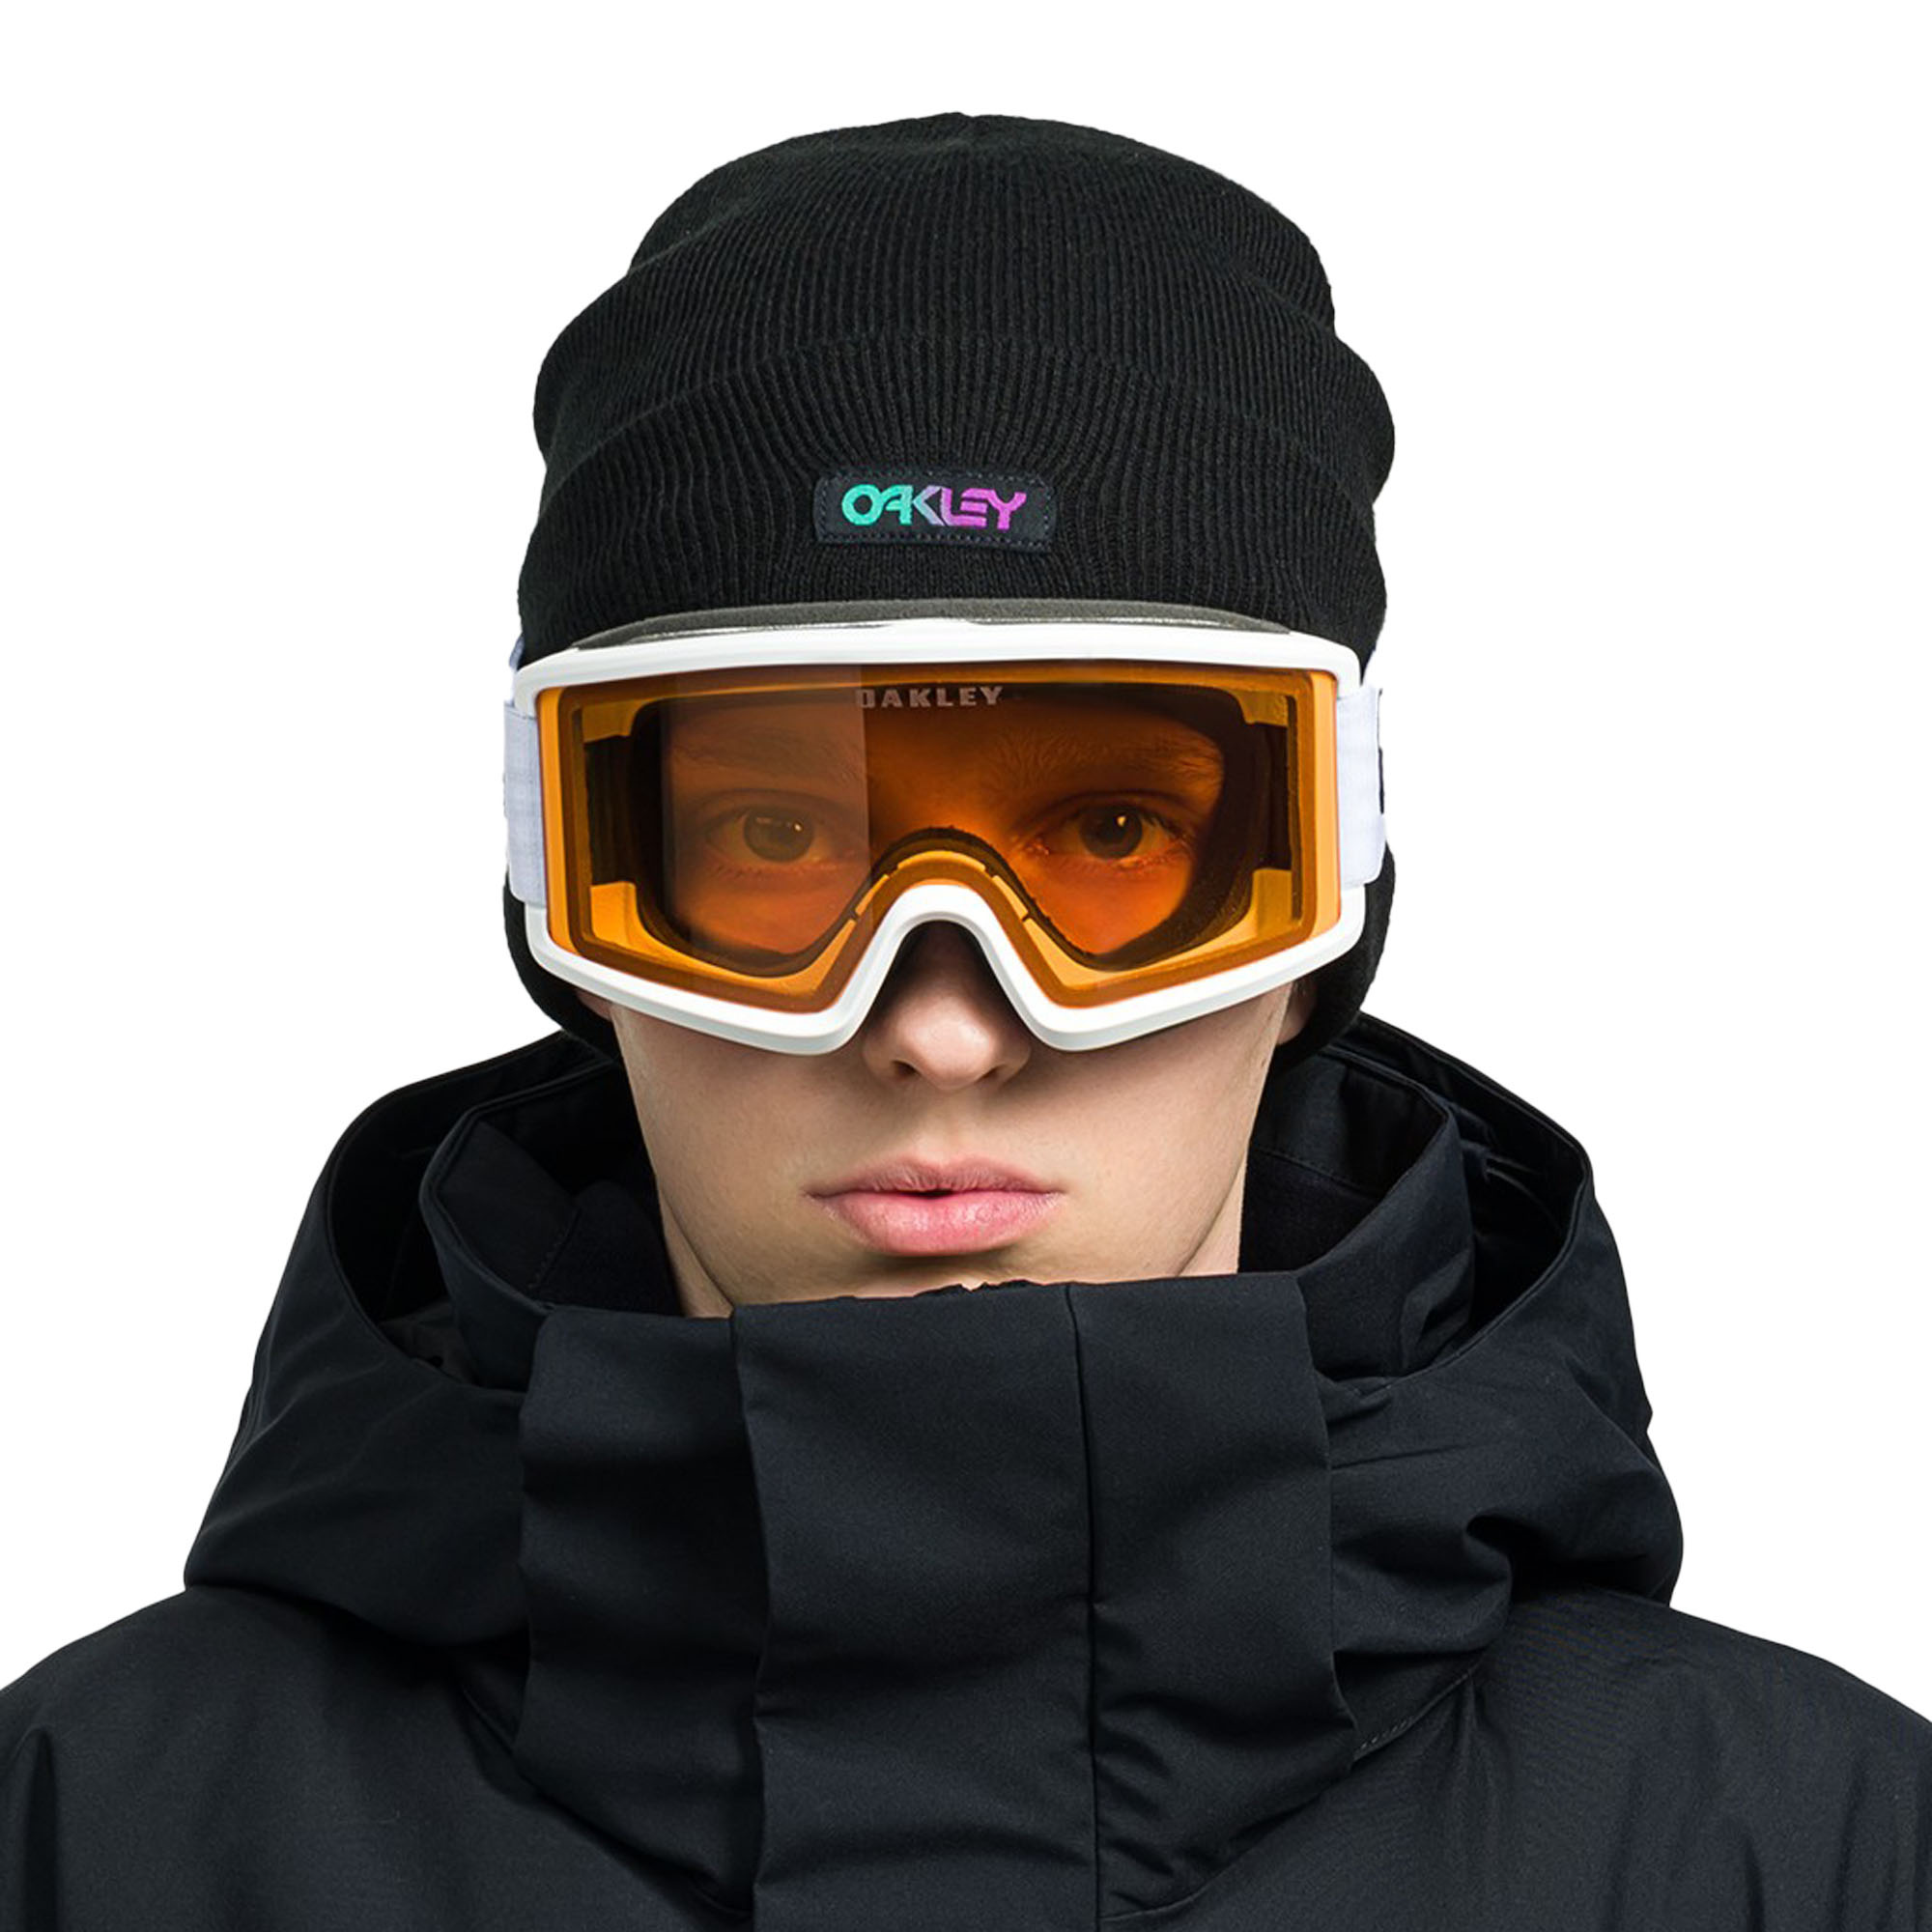 Oakley Target Line S Snowboard/Ski Goggles